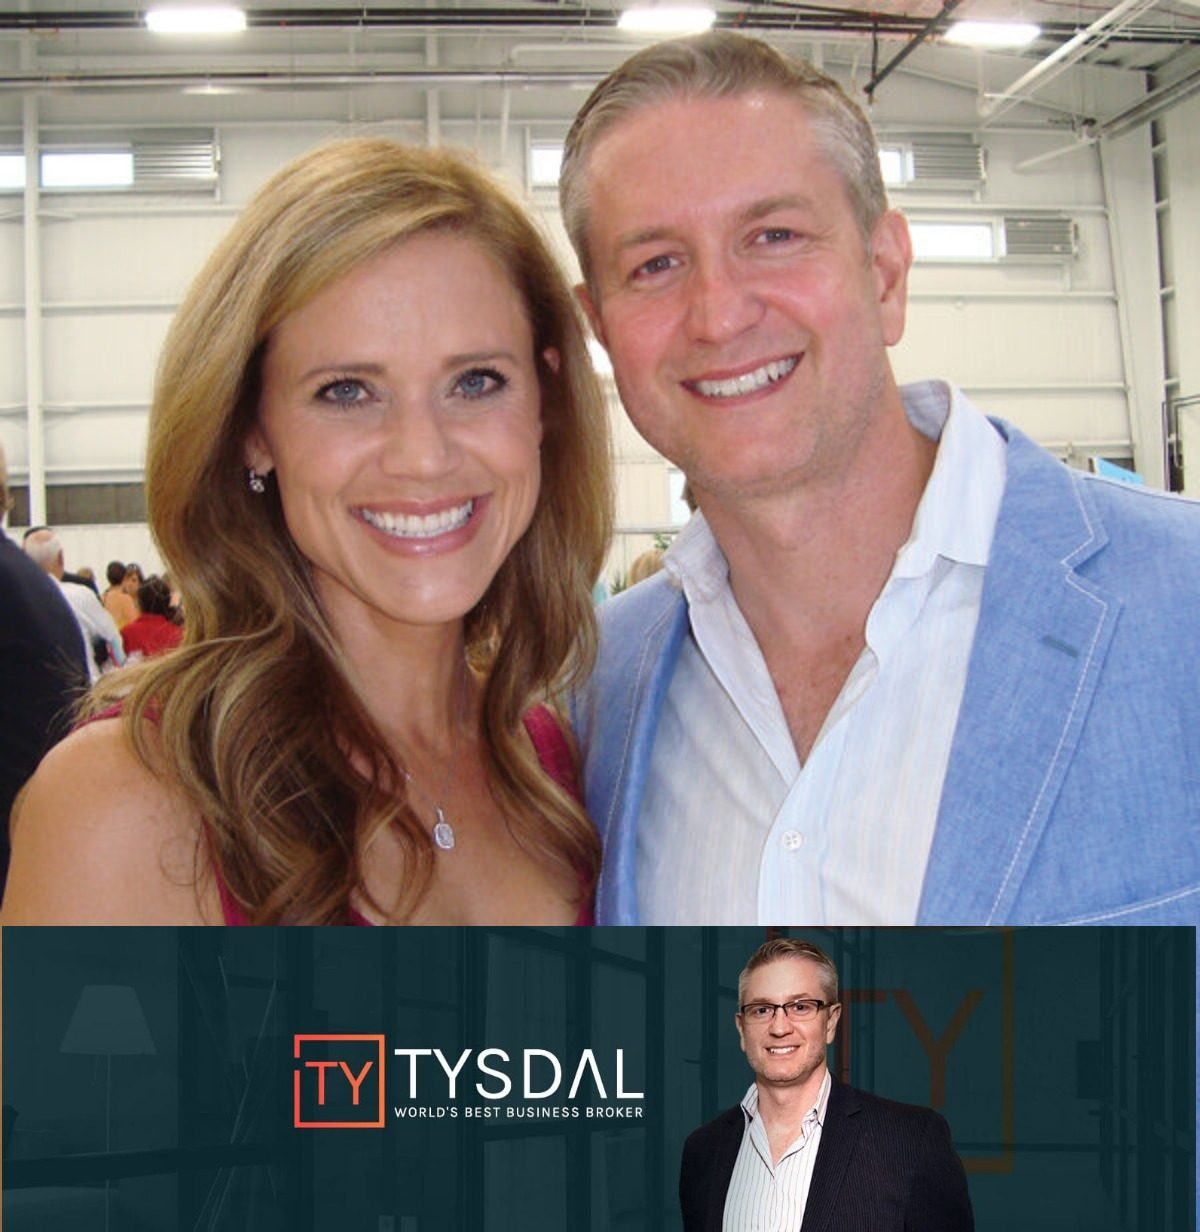 Tyler Tysdal with Natalie Tysdal